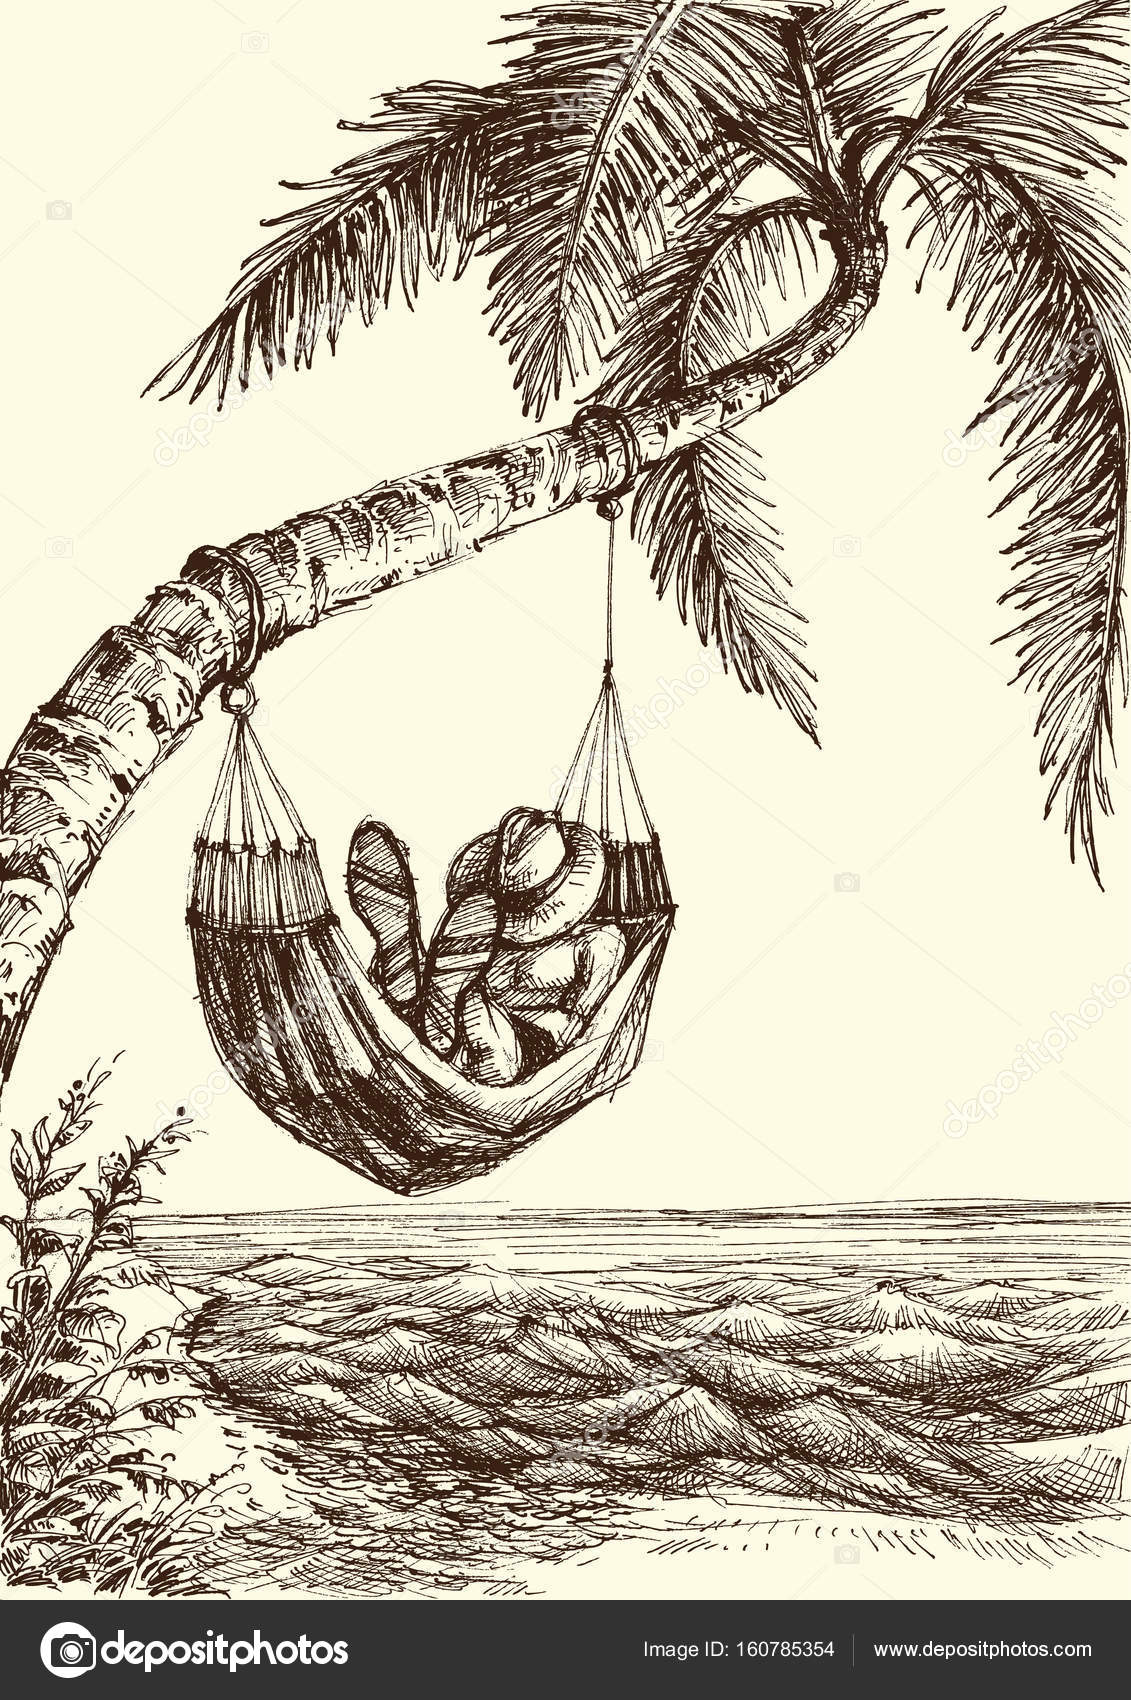 palm tree beach drawing